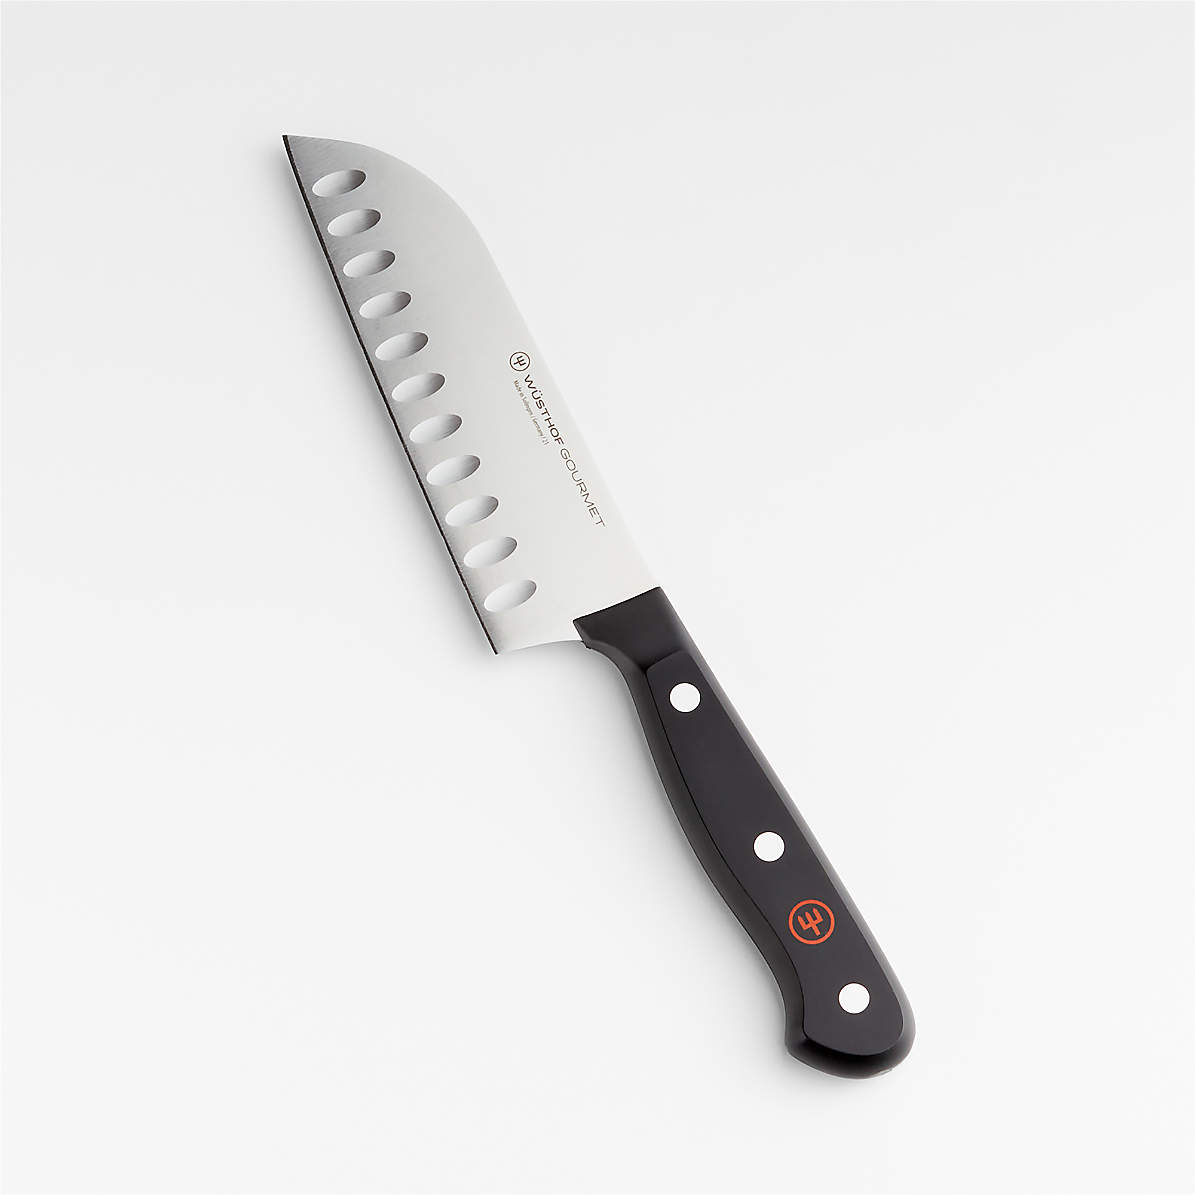 KitchenAid Gourmet 2-Piece Forged Santoku Knife Set, Black